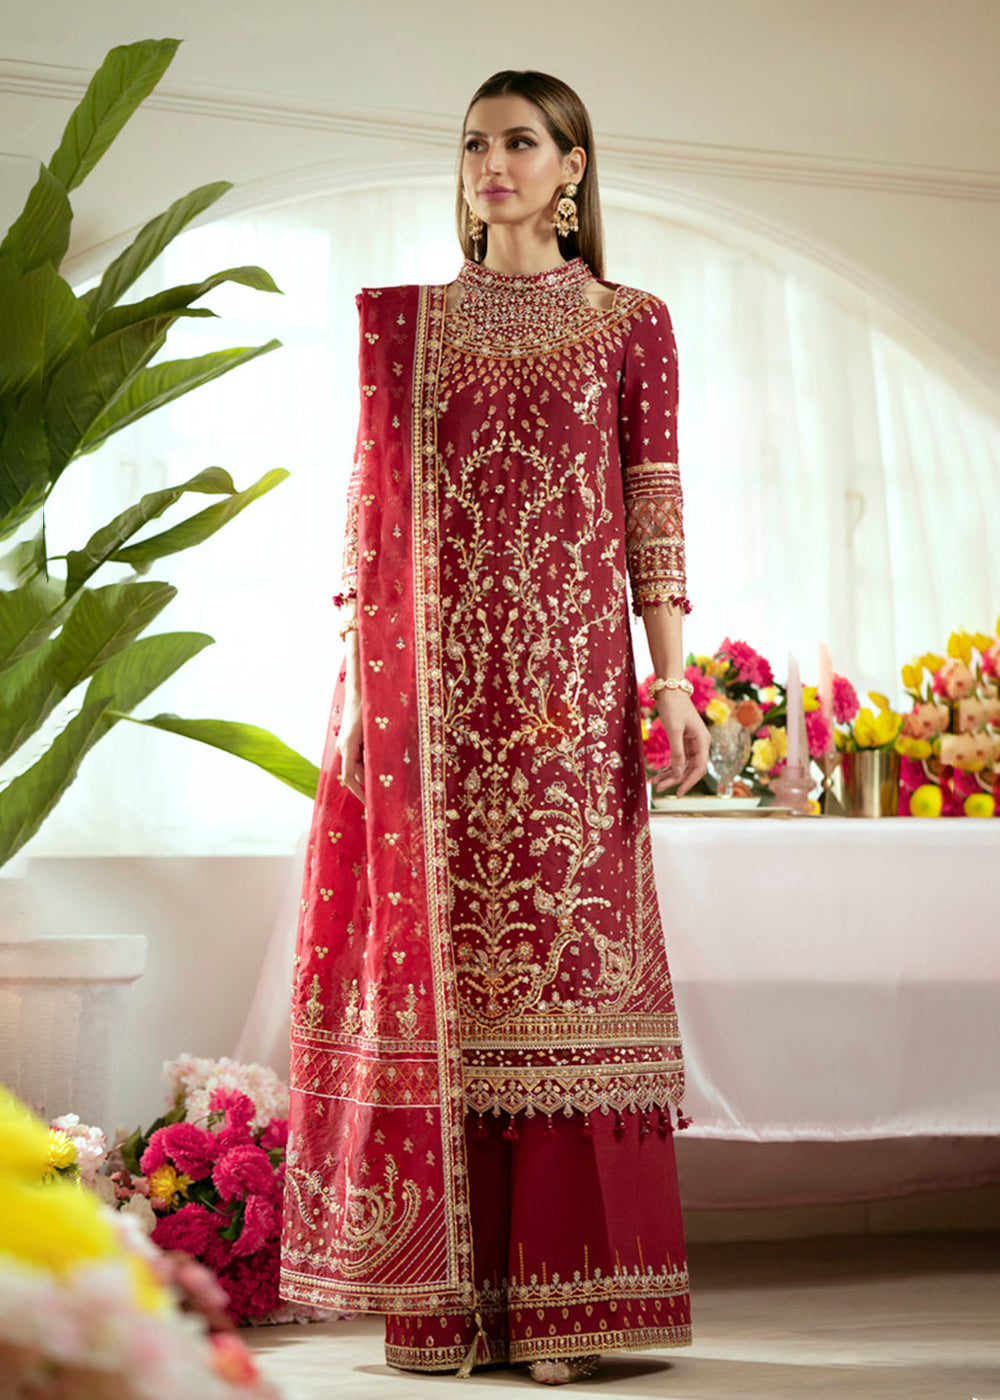 Buy Now Dilnaaz Wedding Formals 2023 by Qalamkar | DN-03 - ZAINA Online in USA, UK, Canada & Worldwide at Empress Clothing. 